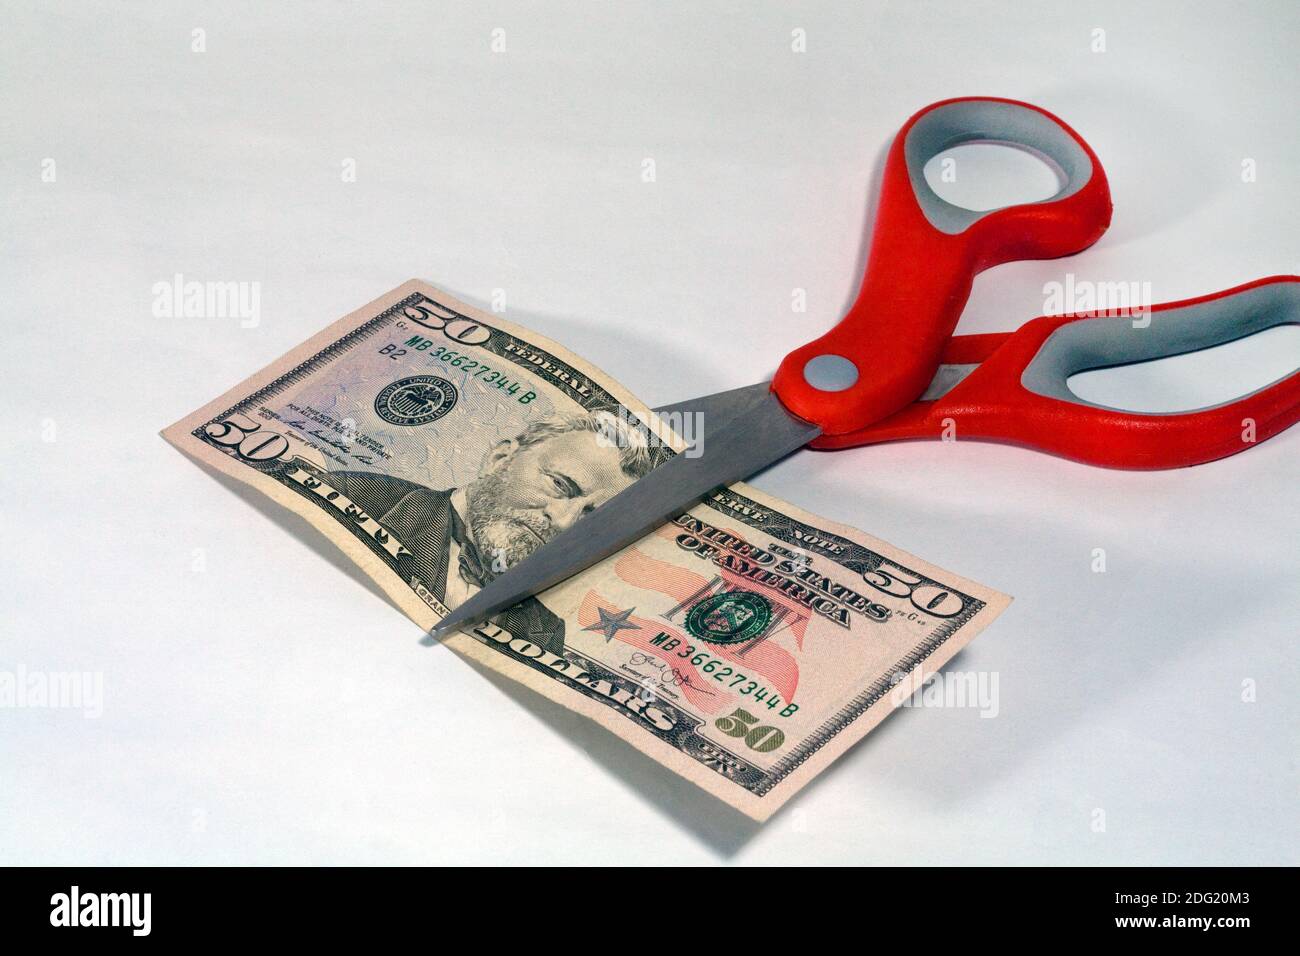 A pair of red-handled scissors cutting a U.S. 50 dollar bill in half. Stock Photo